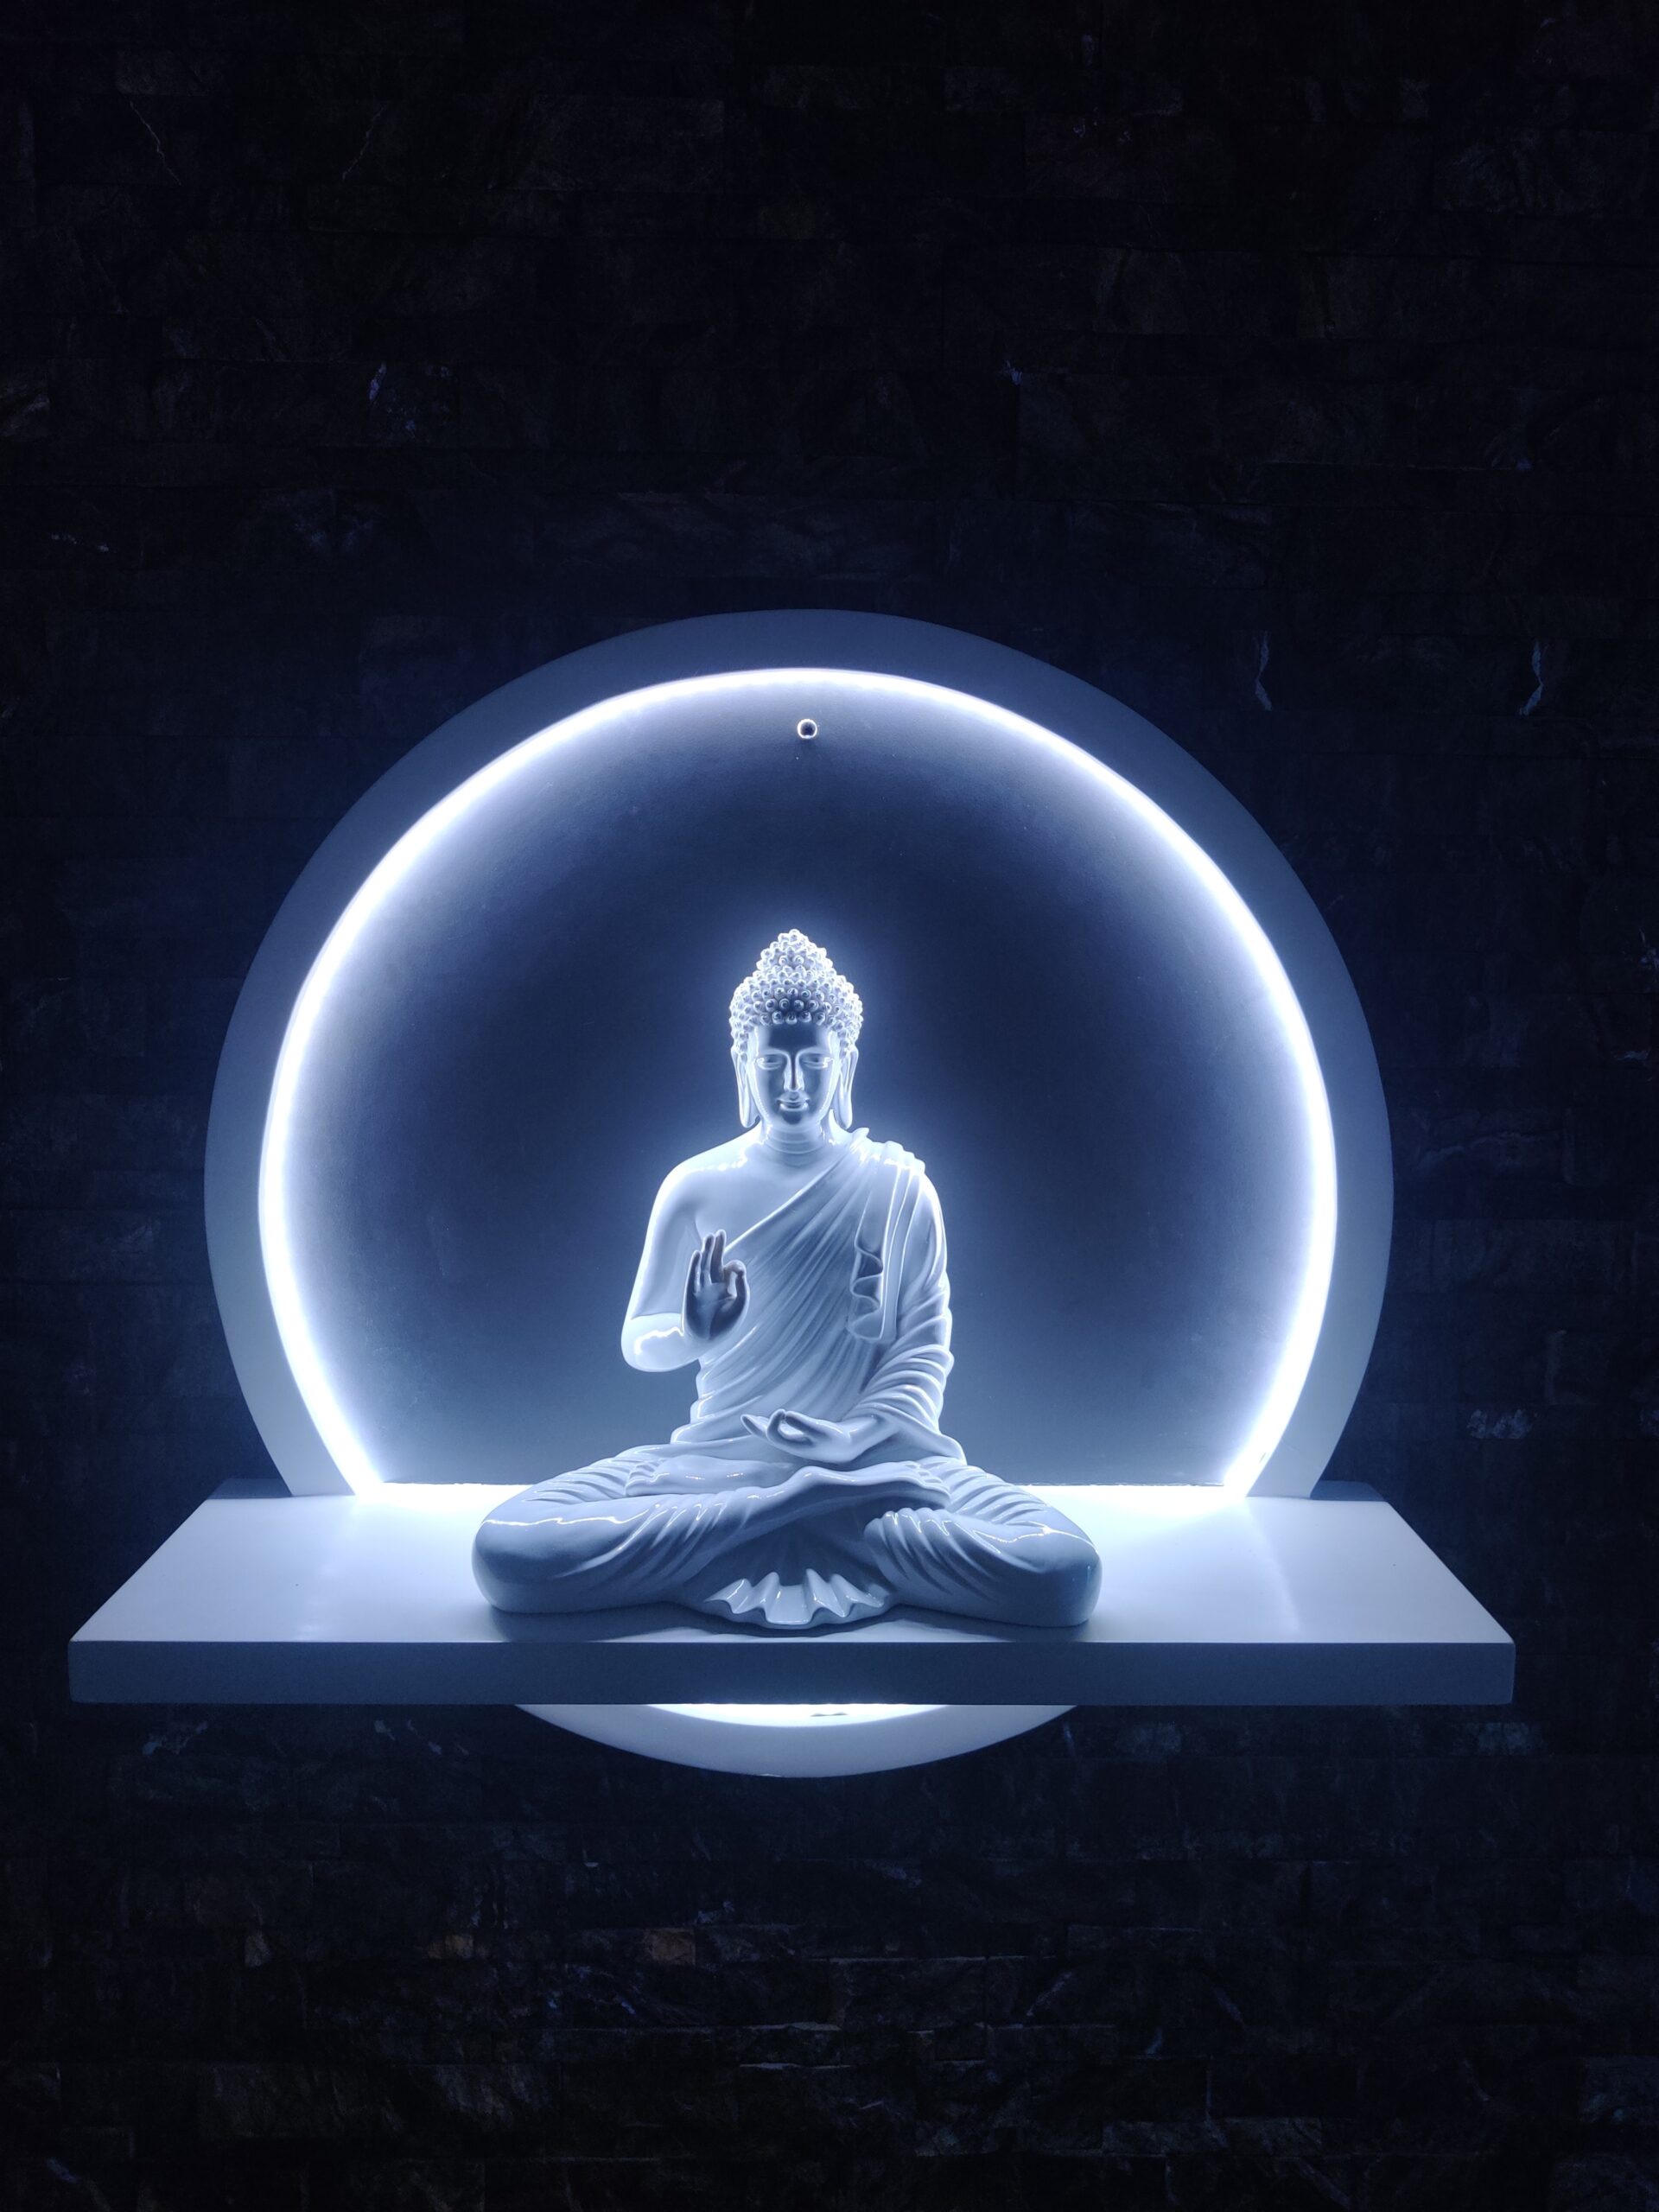 Seated Buddha is meditative pose in blue neon glow